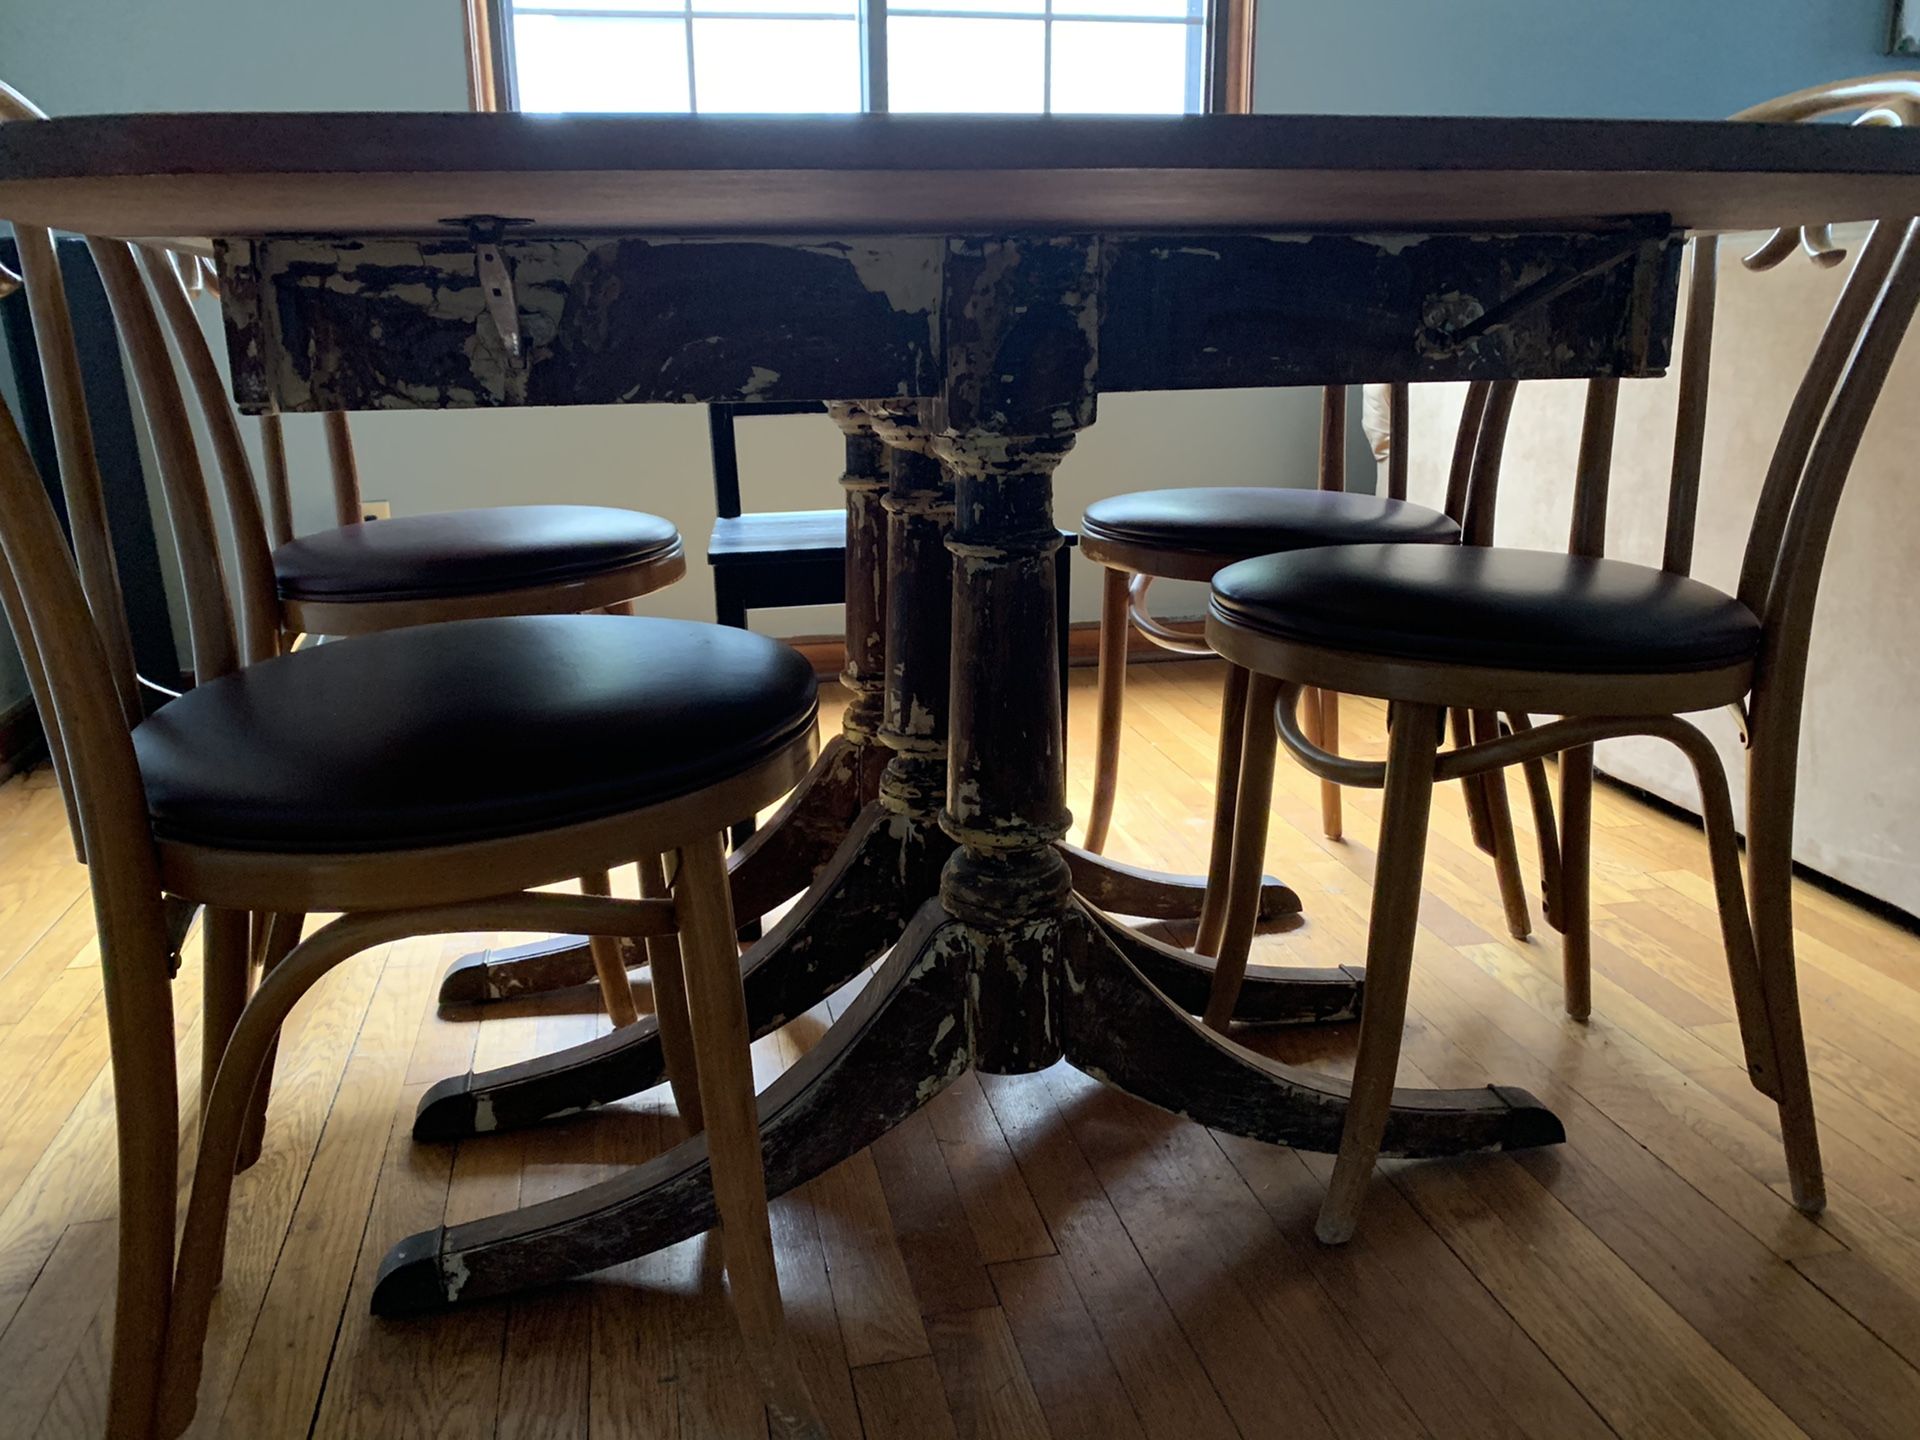 Restored Vintage Dining Room Table